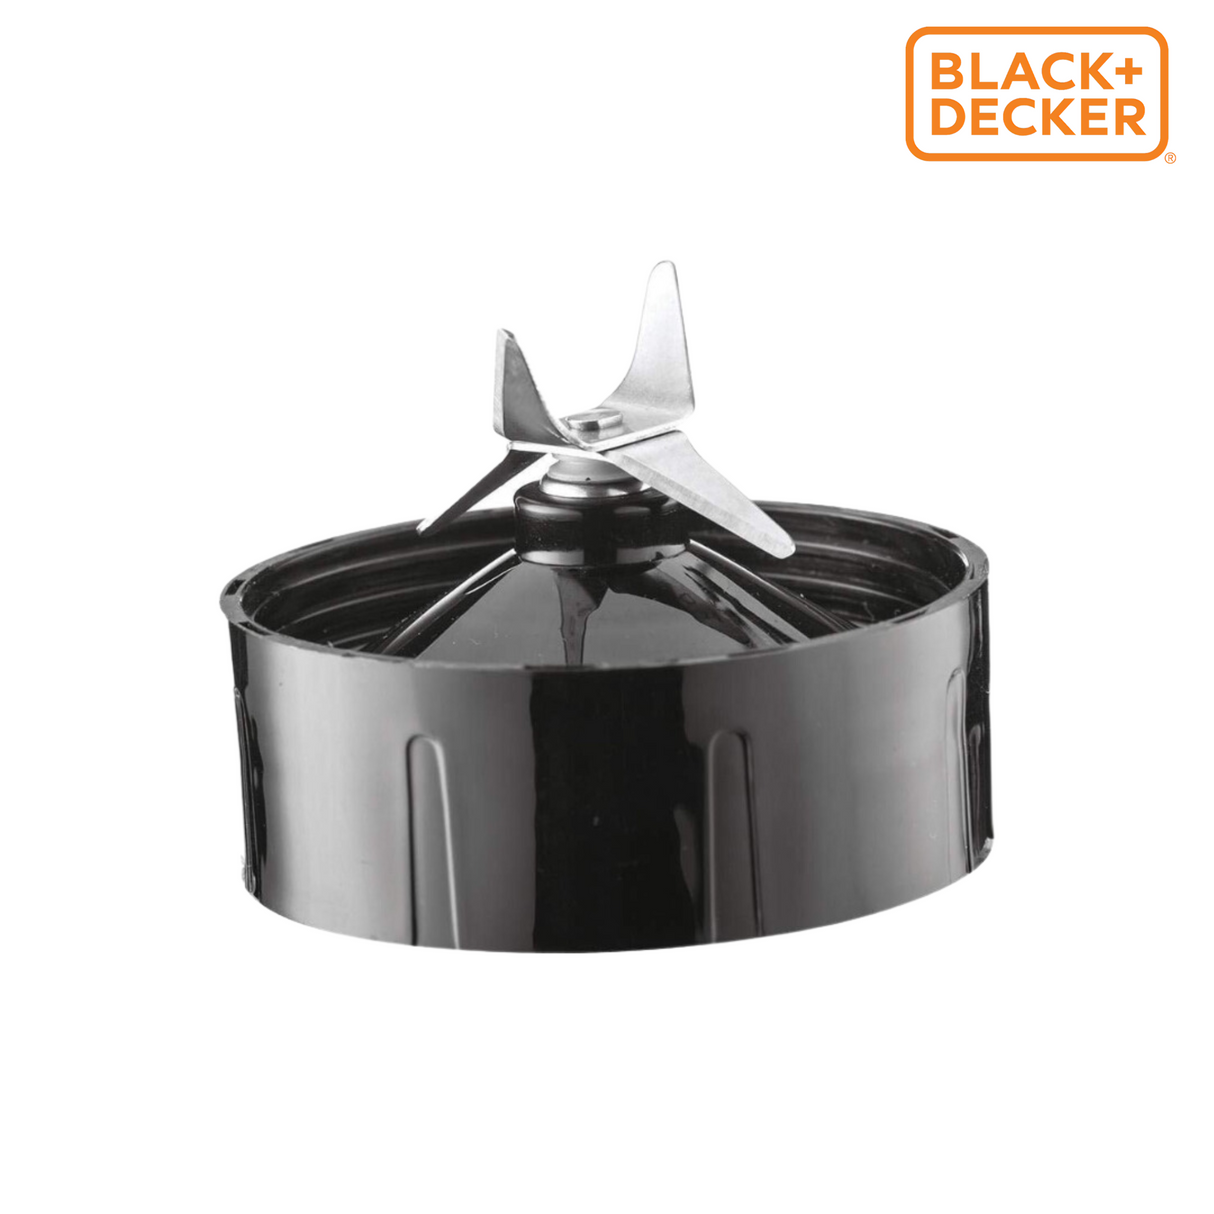 Black & Decker Blender - 400Watt, 1.5 Liters